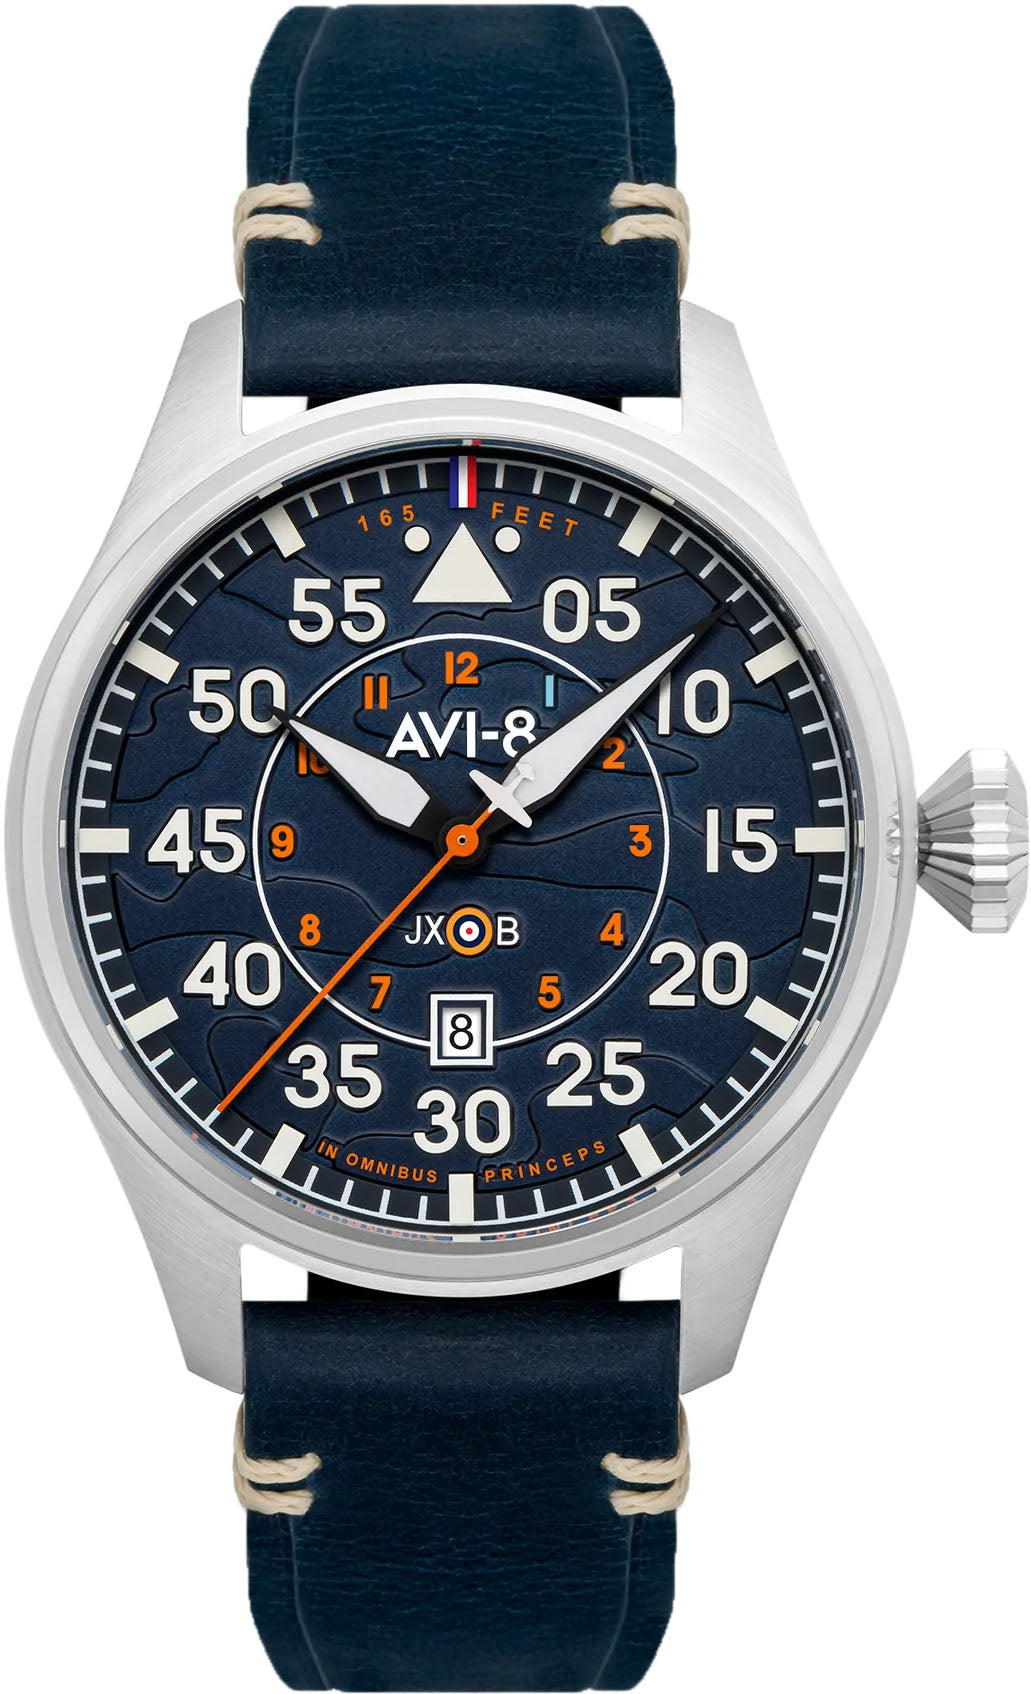 Photos - Wrist Watch AVI-8 Watch Hawker Hurricane Clowes Automatic - Blue AV-158 